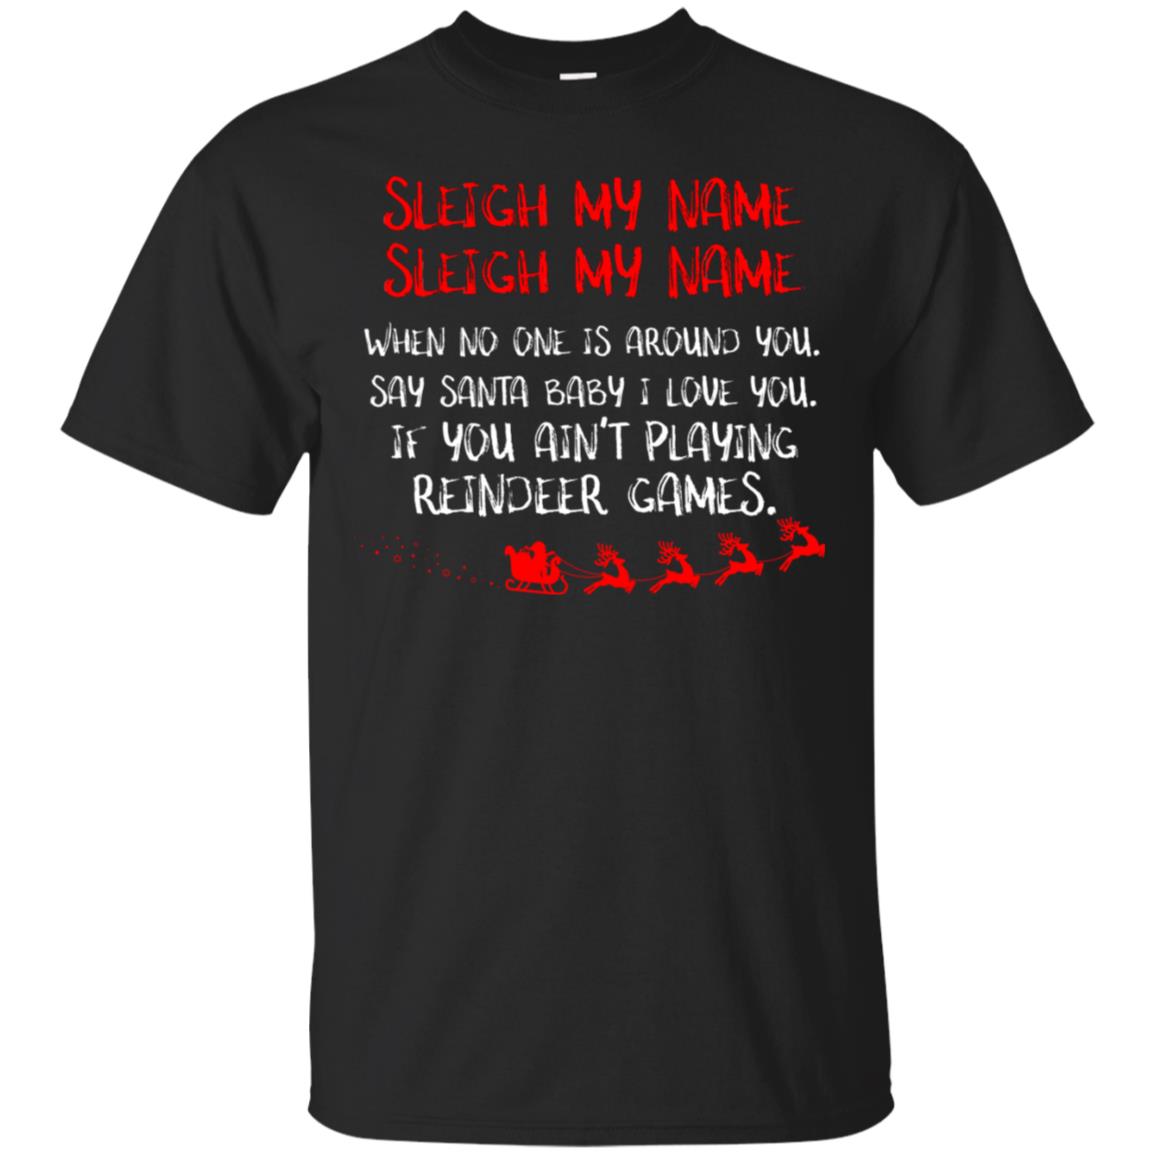 Sleigh My Nam When No One Around You Saying Baby I Love You If You Ain't Playing Reindeer Games ShirtG200 Gildan Ultra Cotton T-Shirt